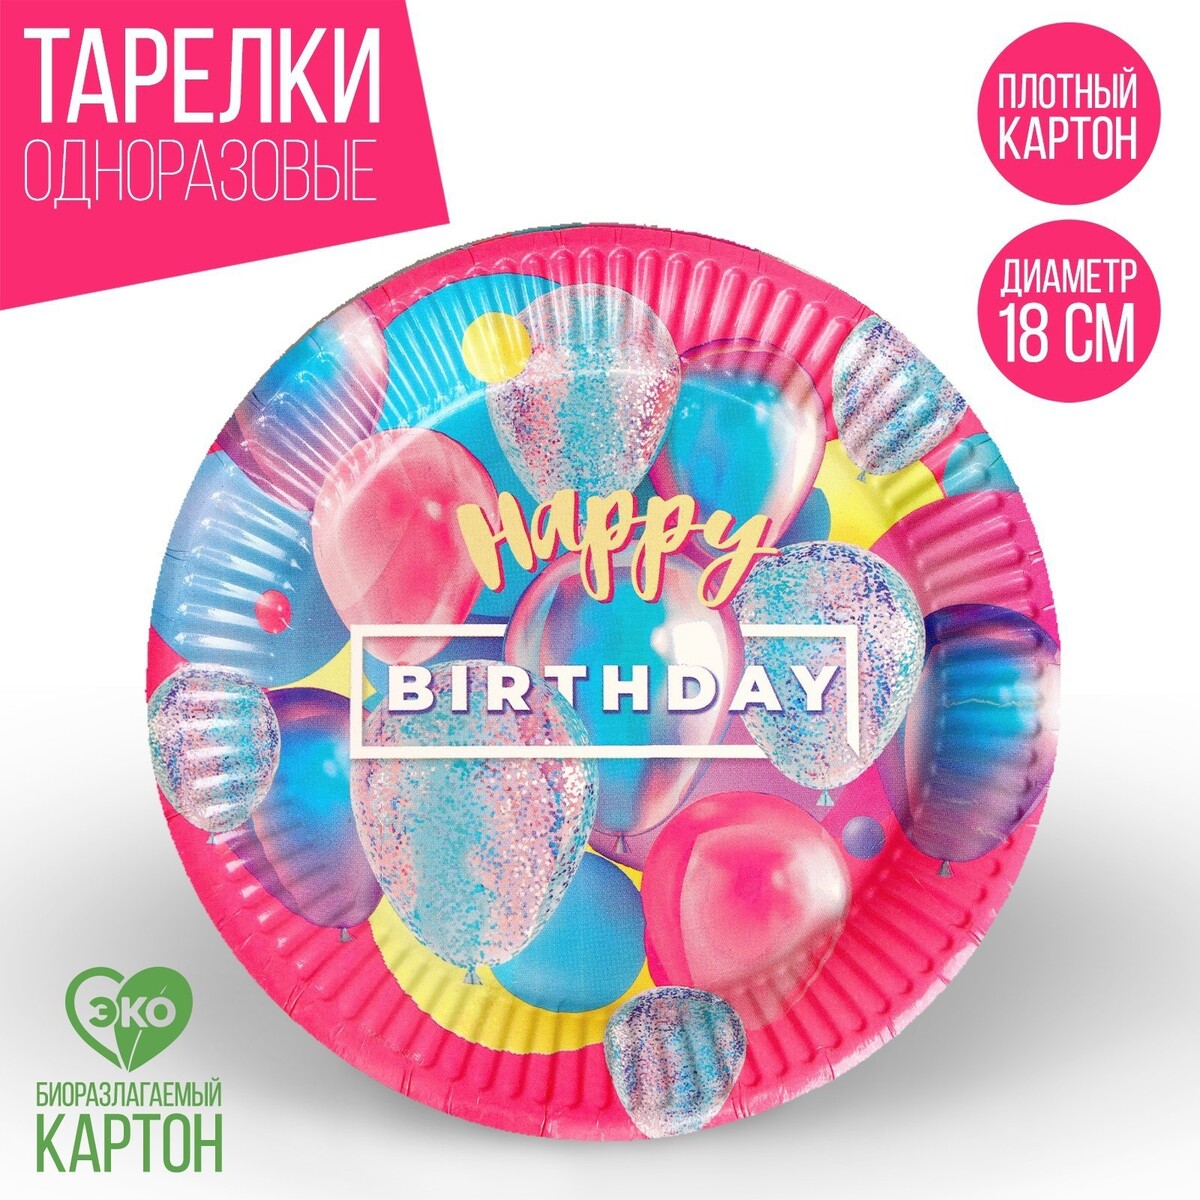 Тарелка одноразовая бумажная happy birthday, набор 6 шт, 18 см merimeri топпер для торта happy birthday